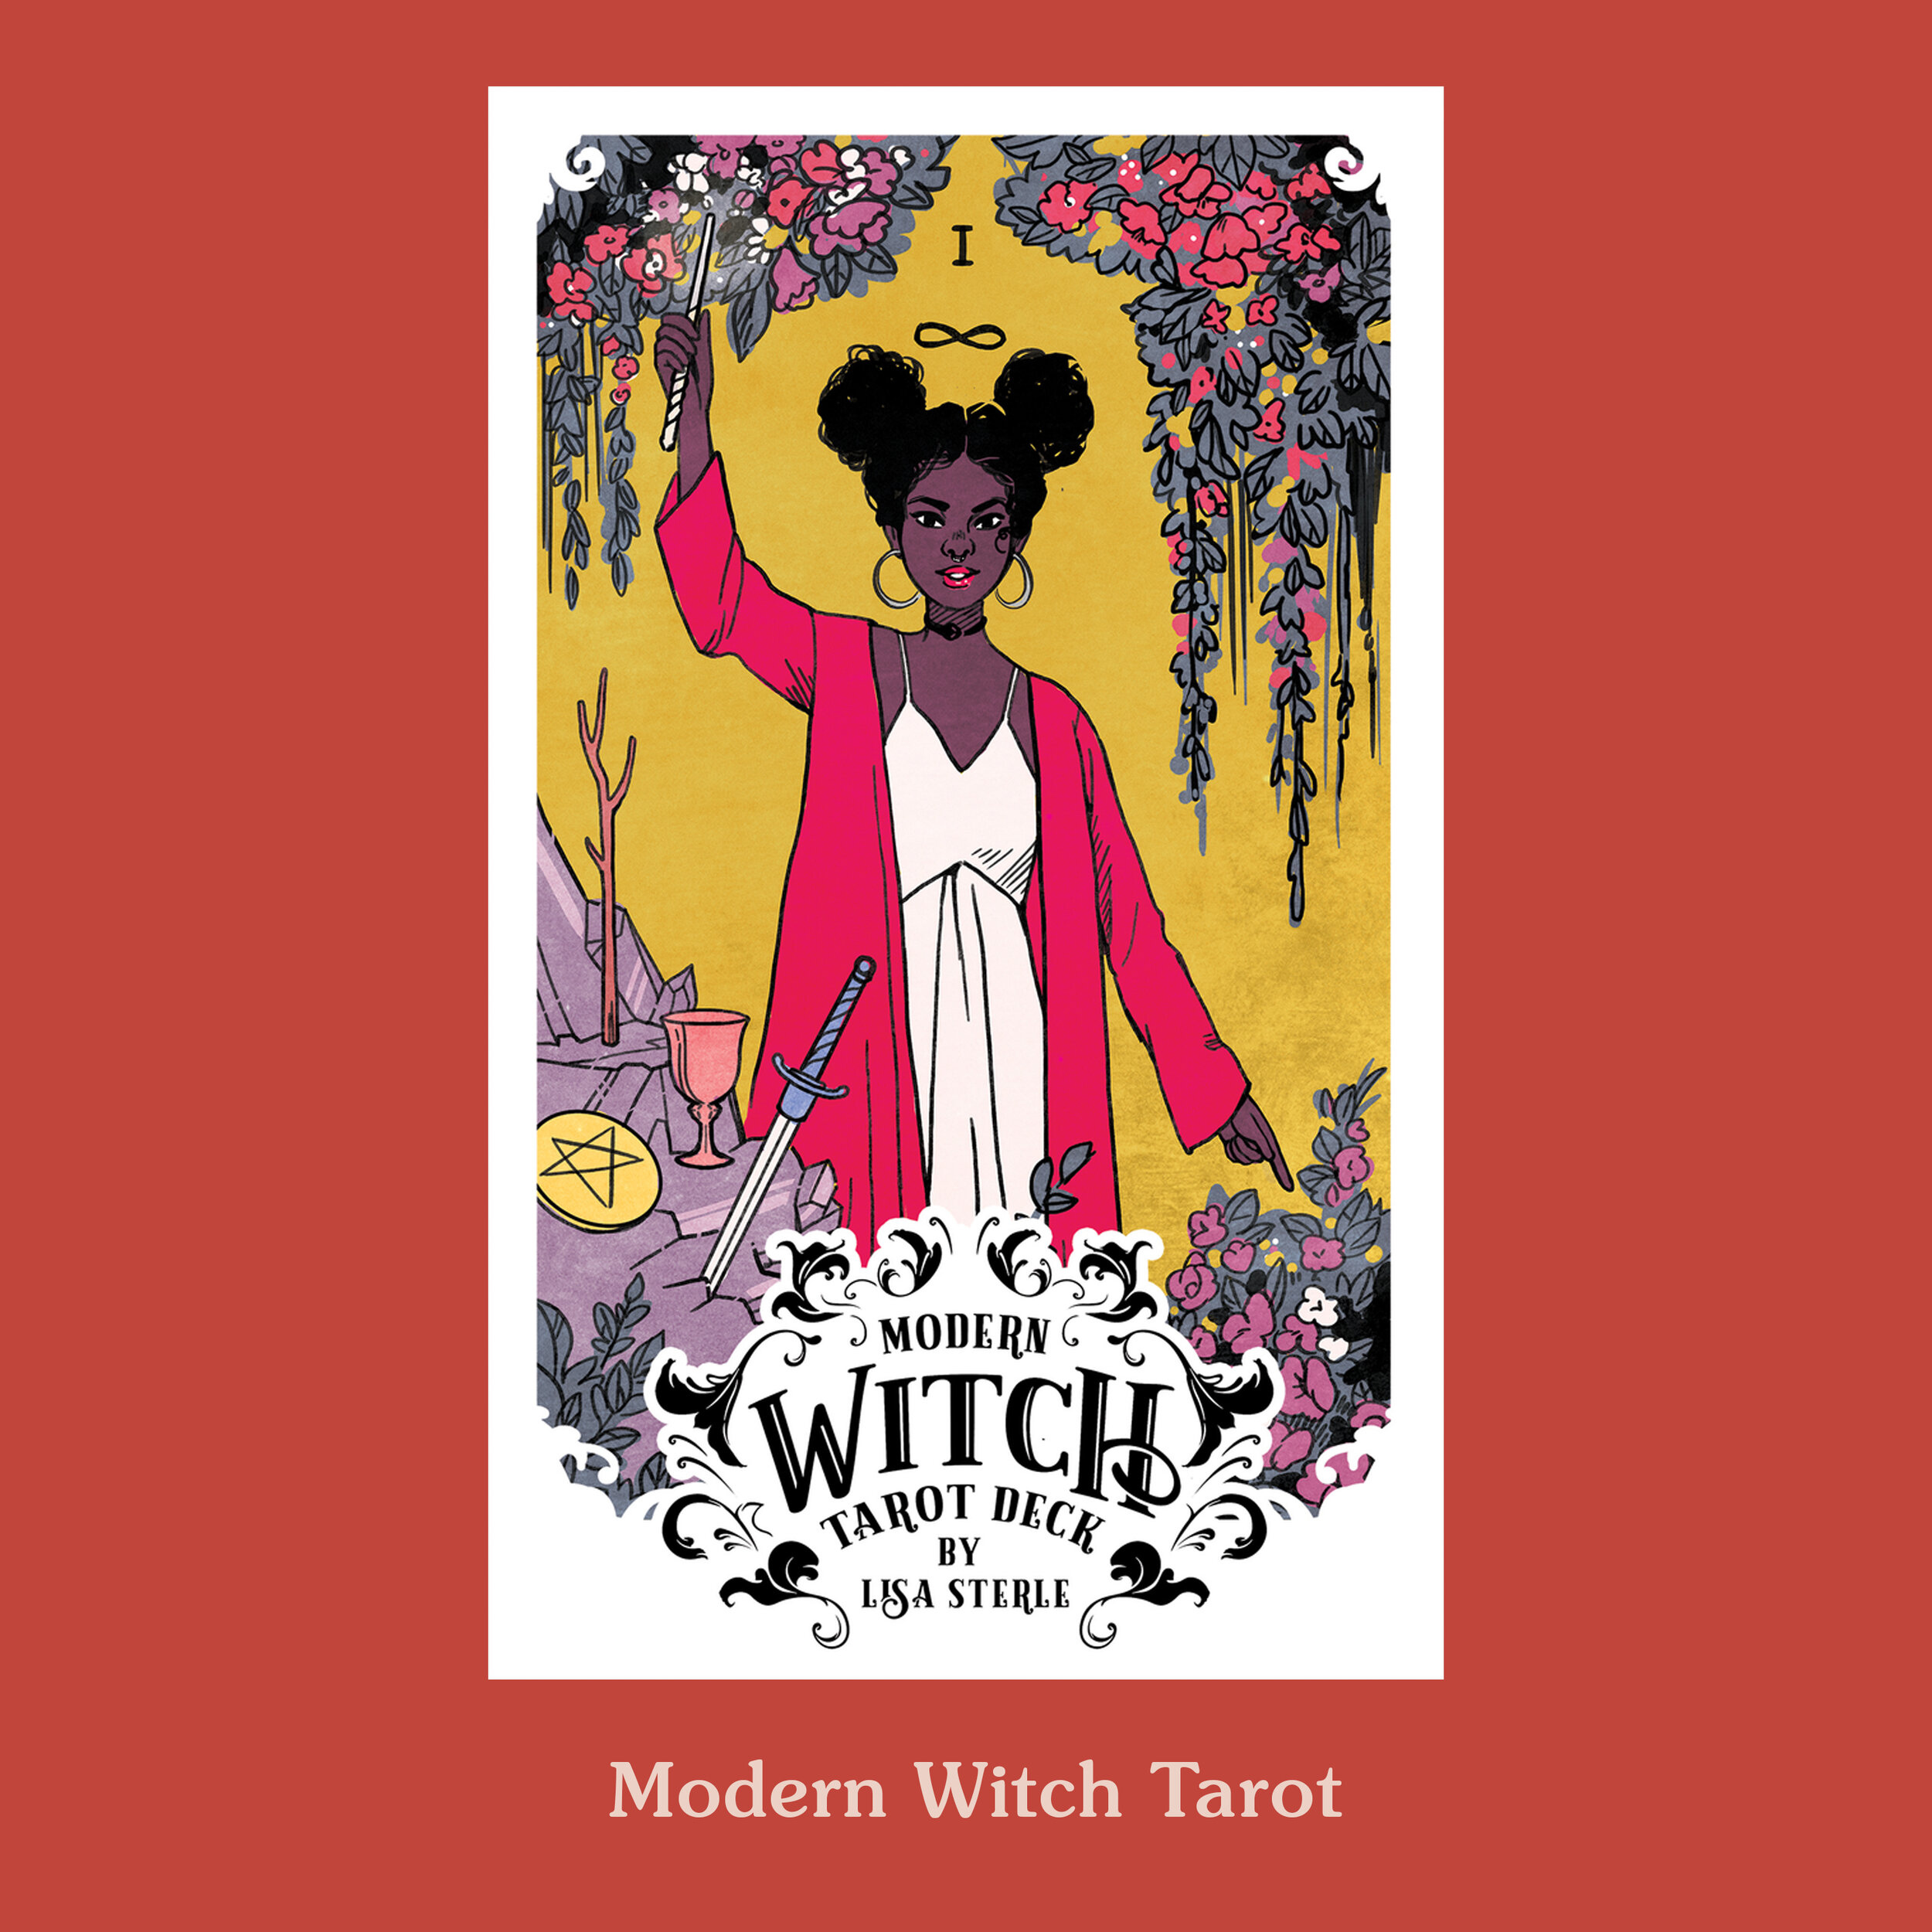 ON ITS WAY: Modern Witch Tarot